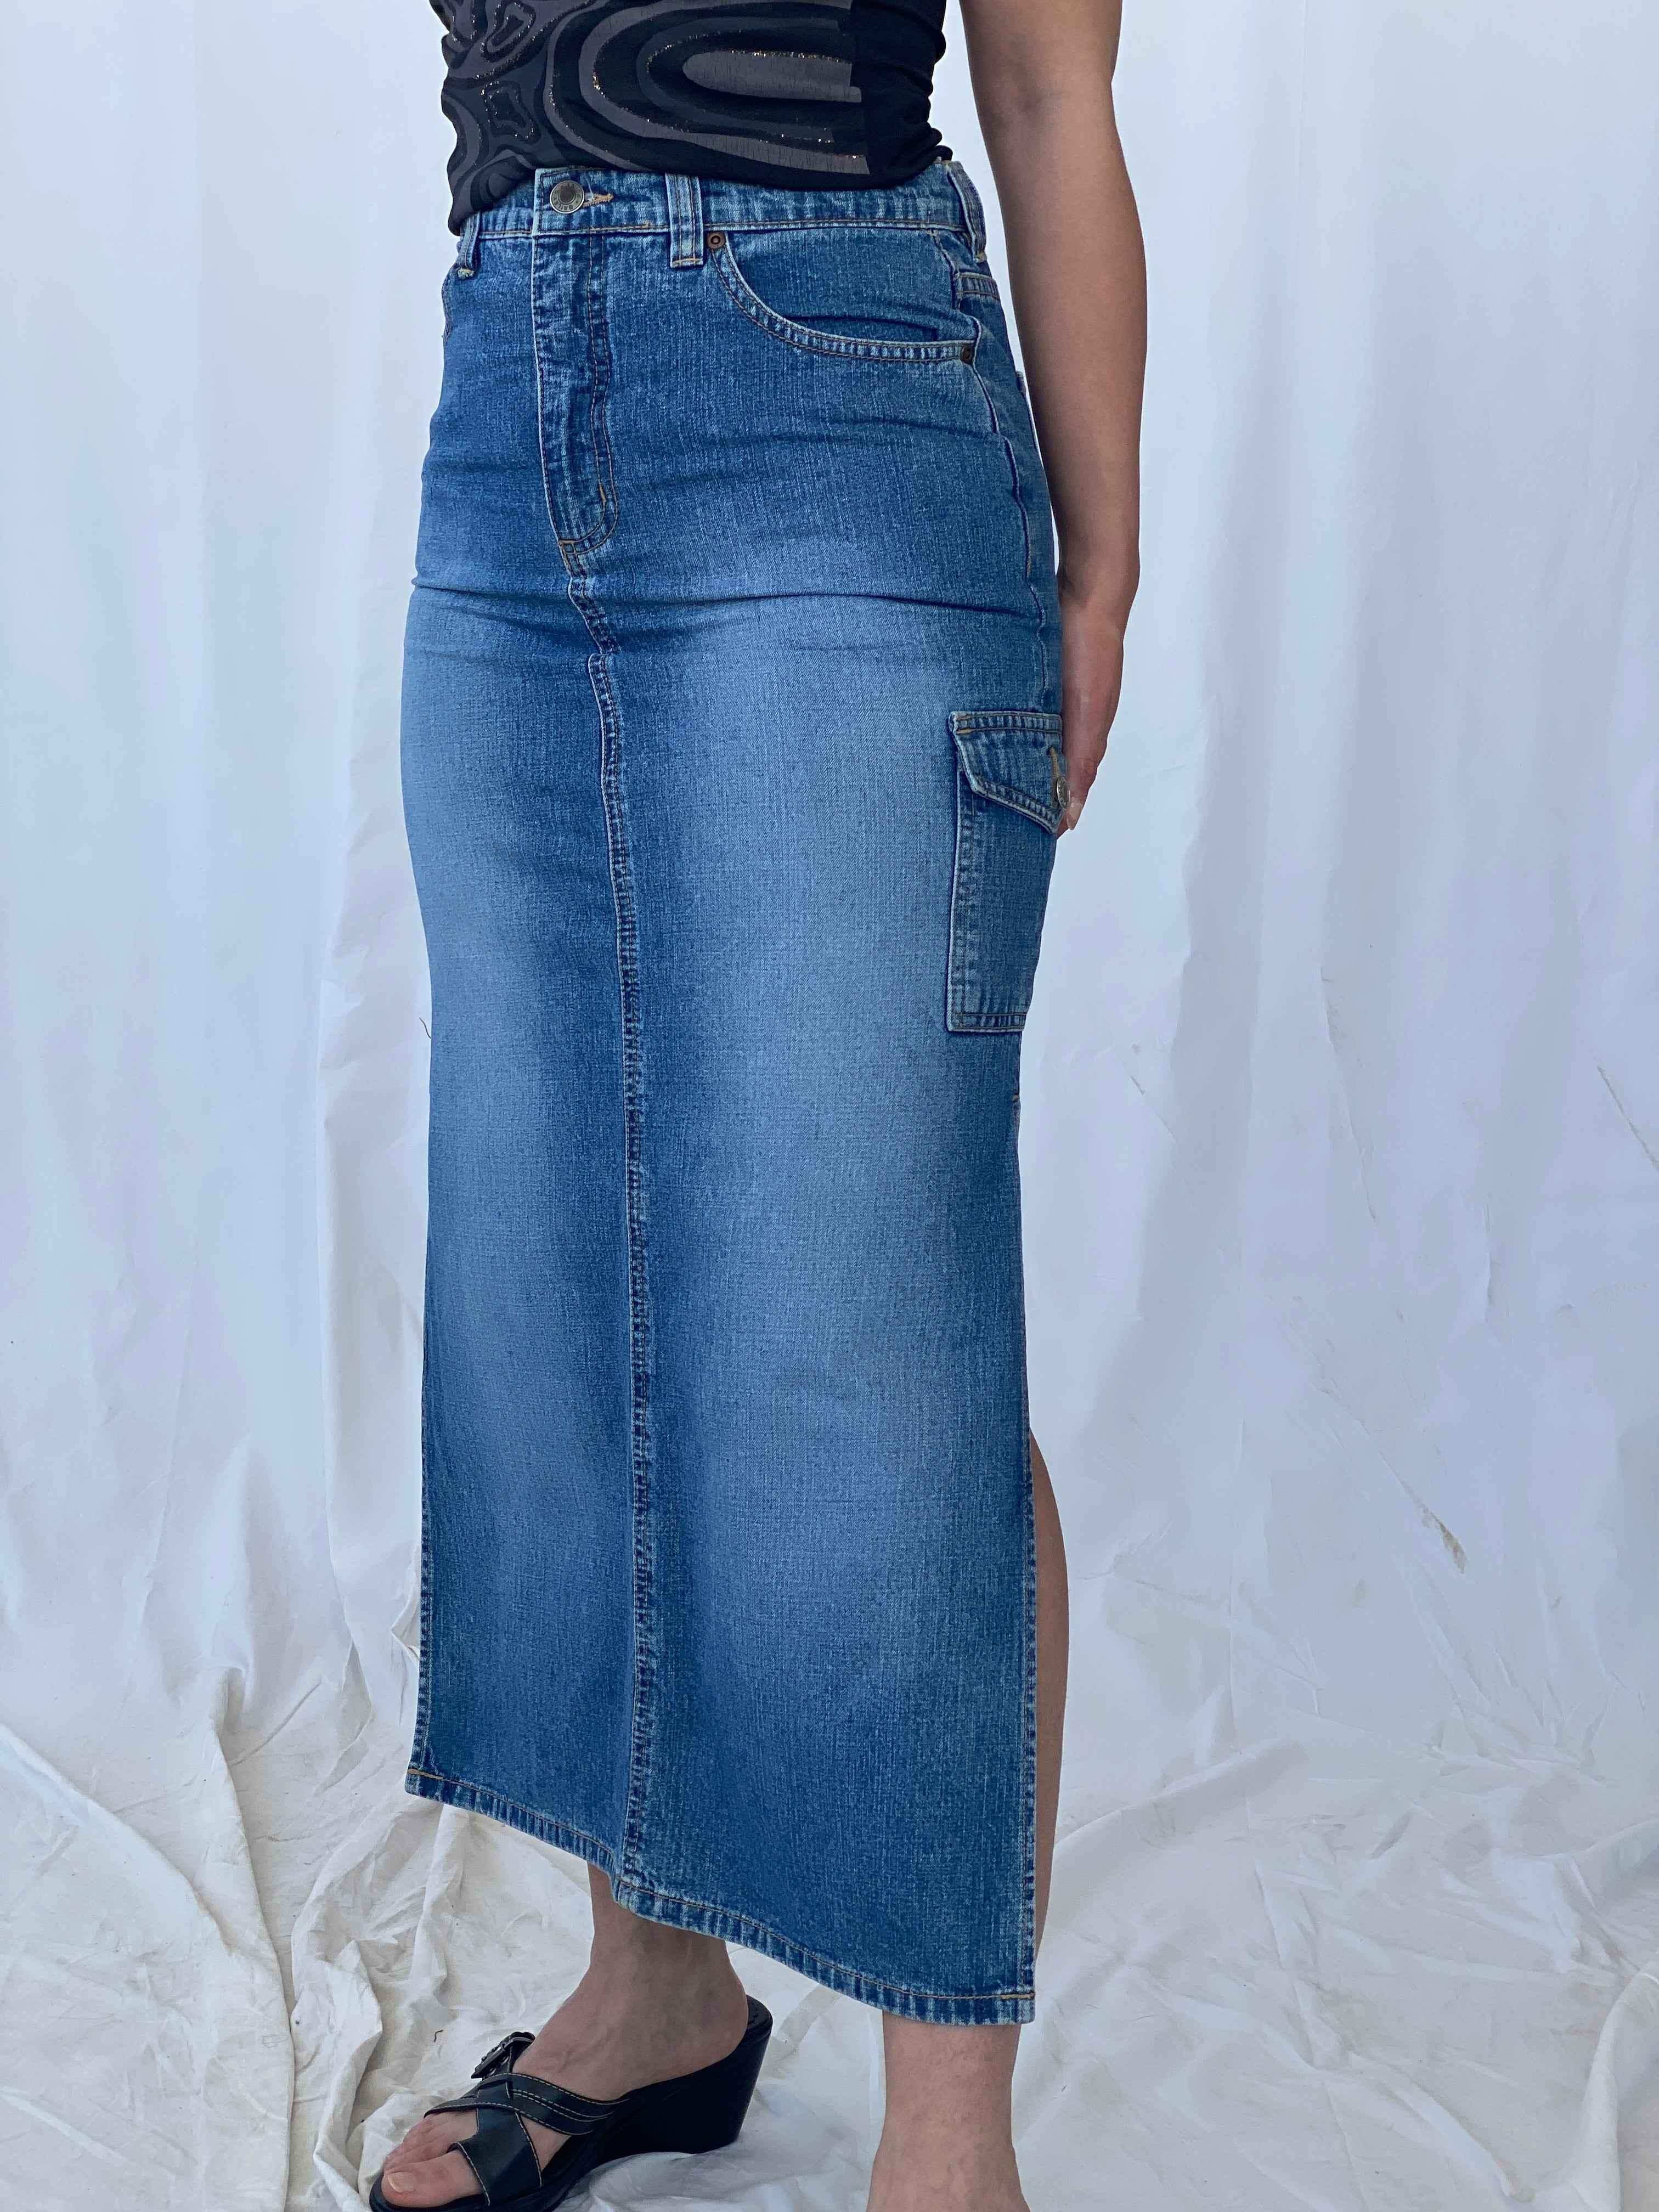 Vintage Bailey’s Point Denim Skirt - Balagan Vintage Denim Skirt 90s, Batoul, denim skirt